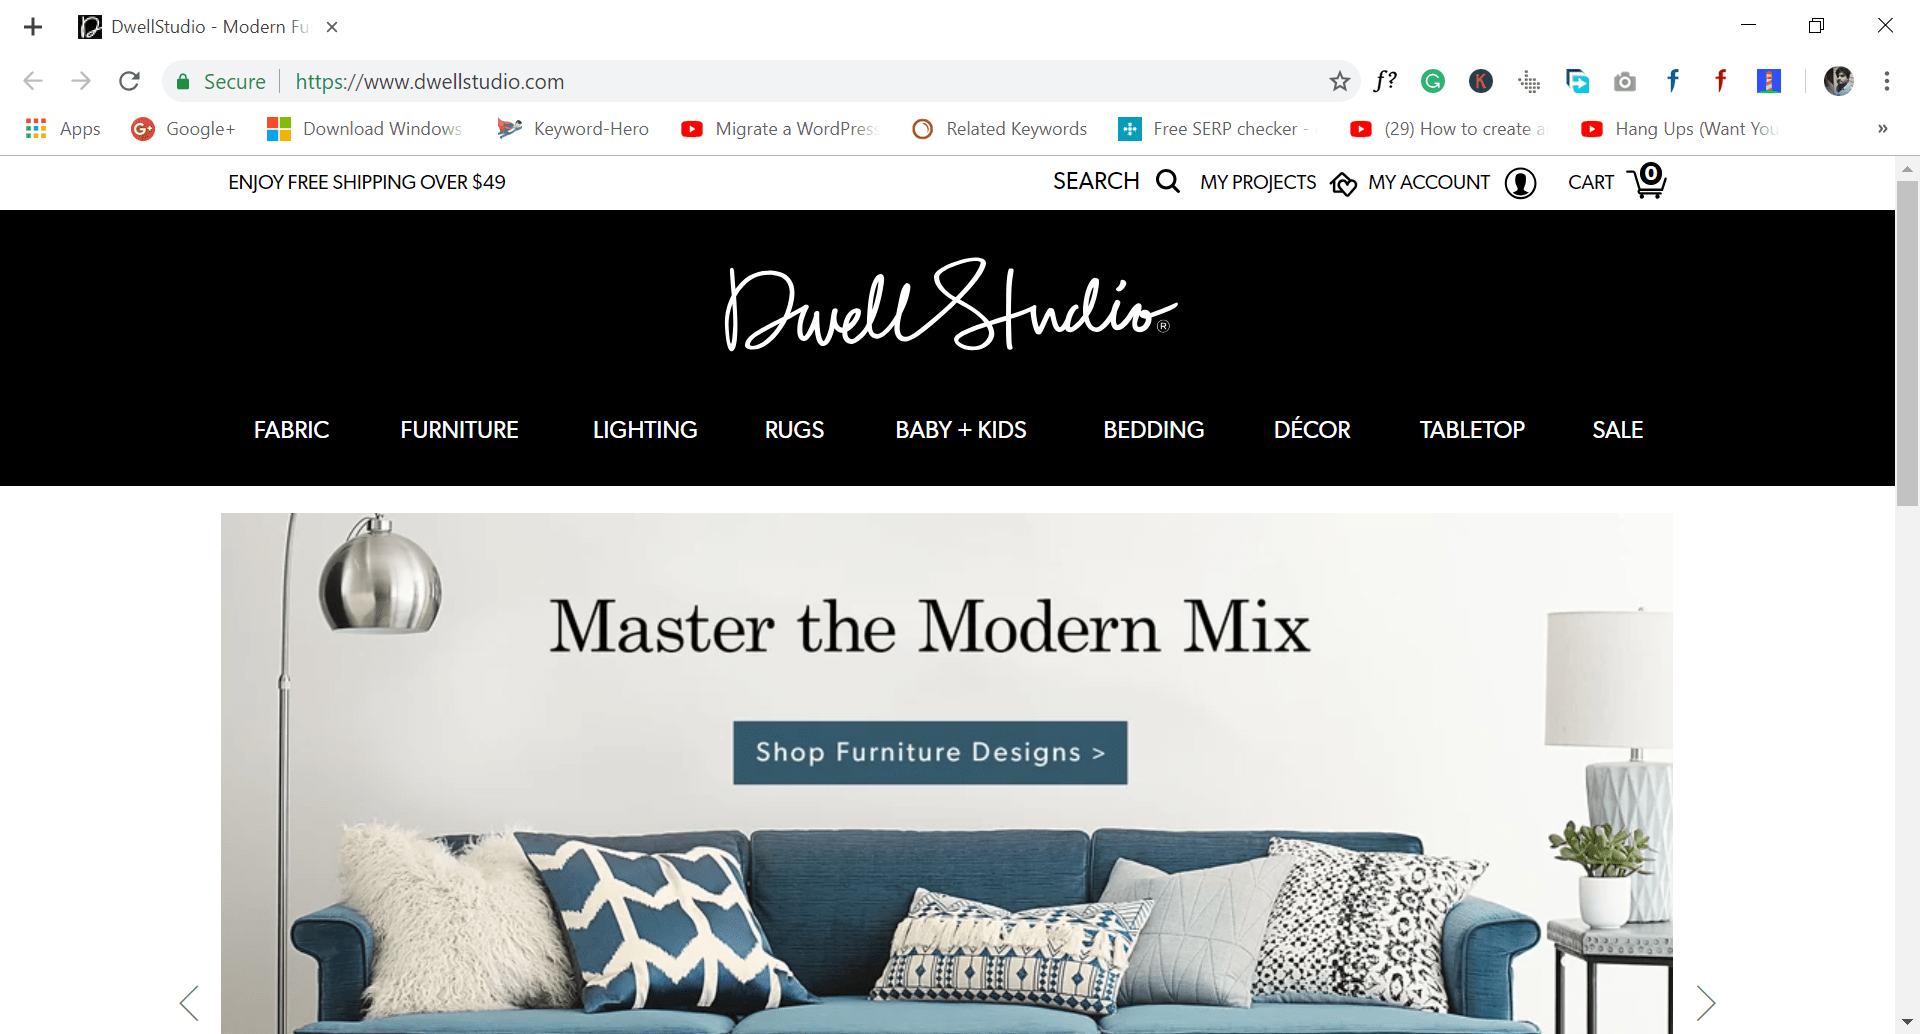 dwell studio - site like wish.com